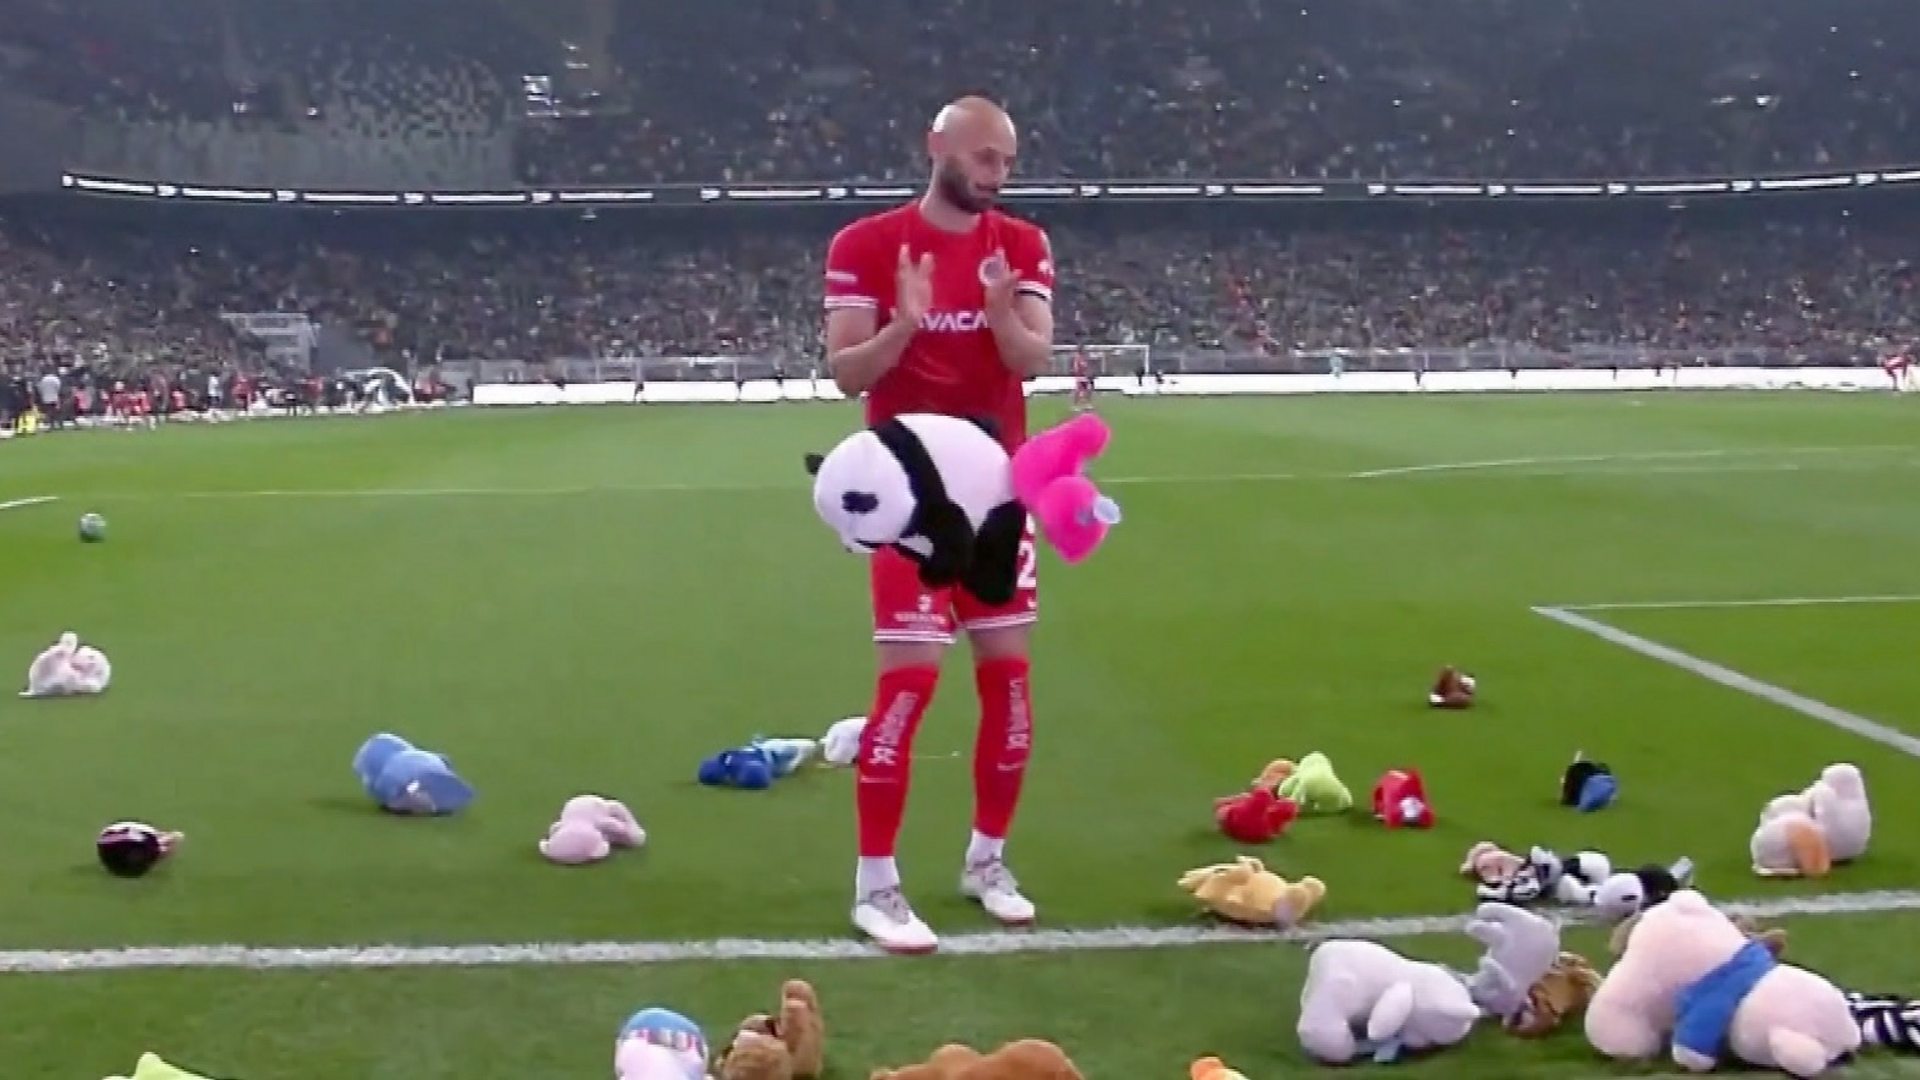 Besiktas vs Antalyaspor delayed as fans throw thousands of toys on